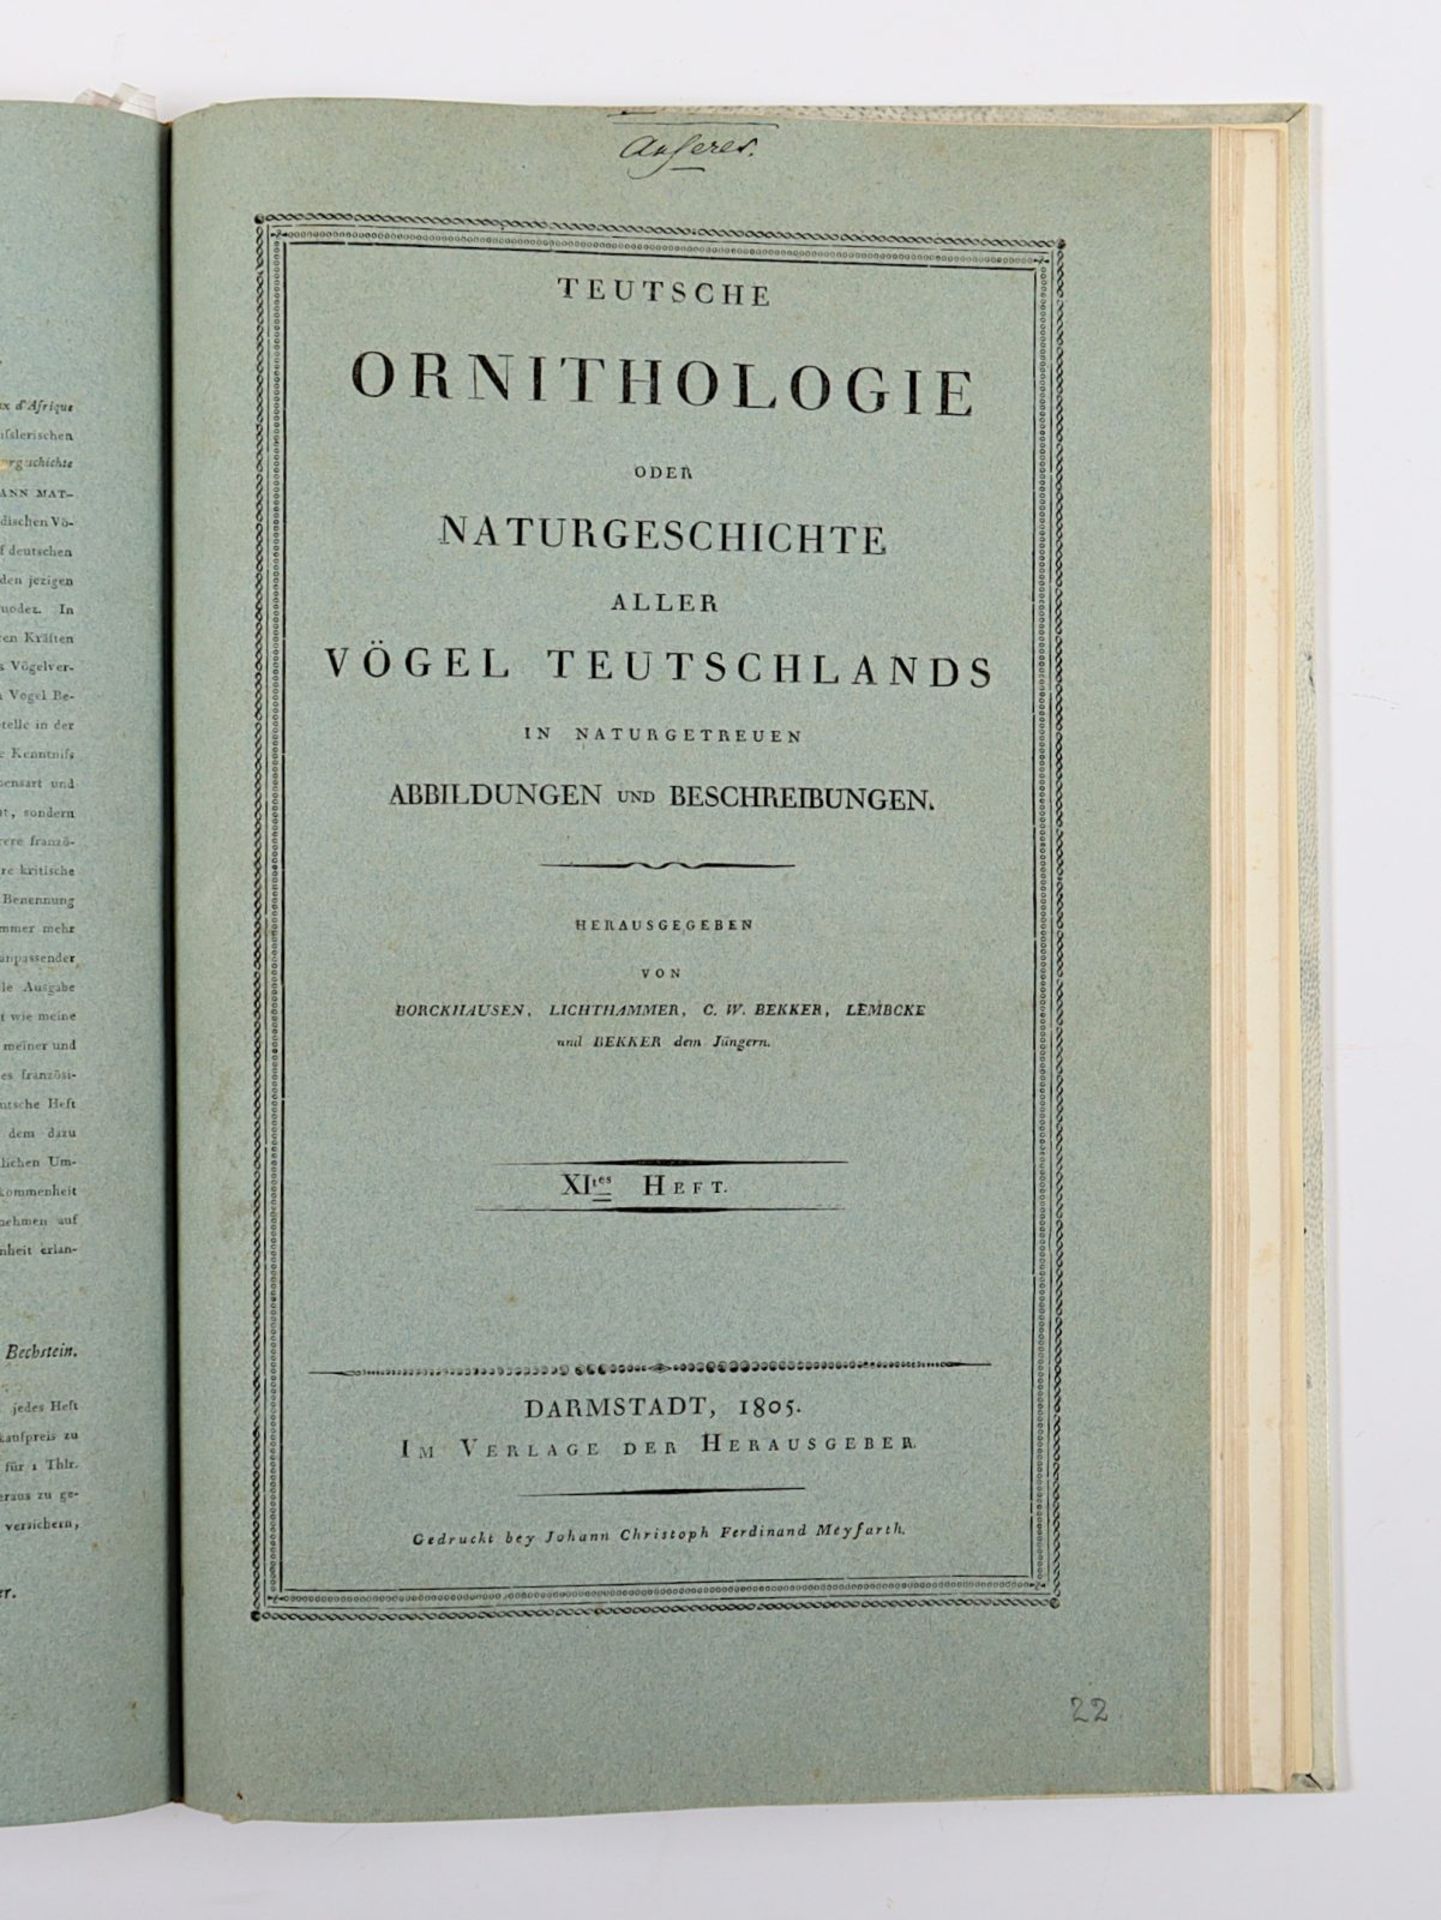 Teutsche Ornithologie, oder Naturgeschichte aller Vögel Teutschlands - Image 9 of 13